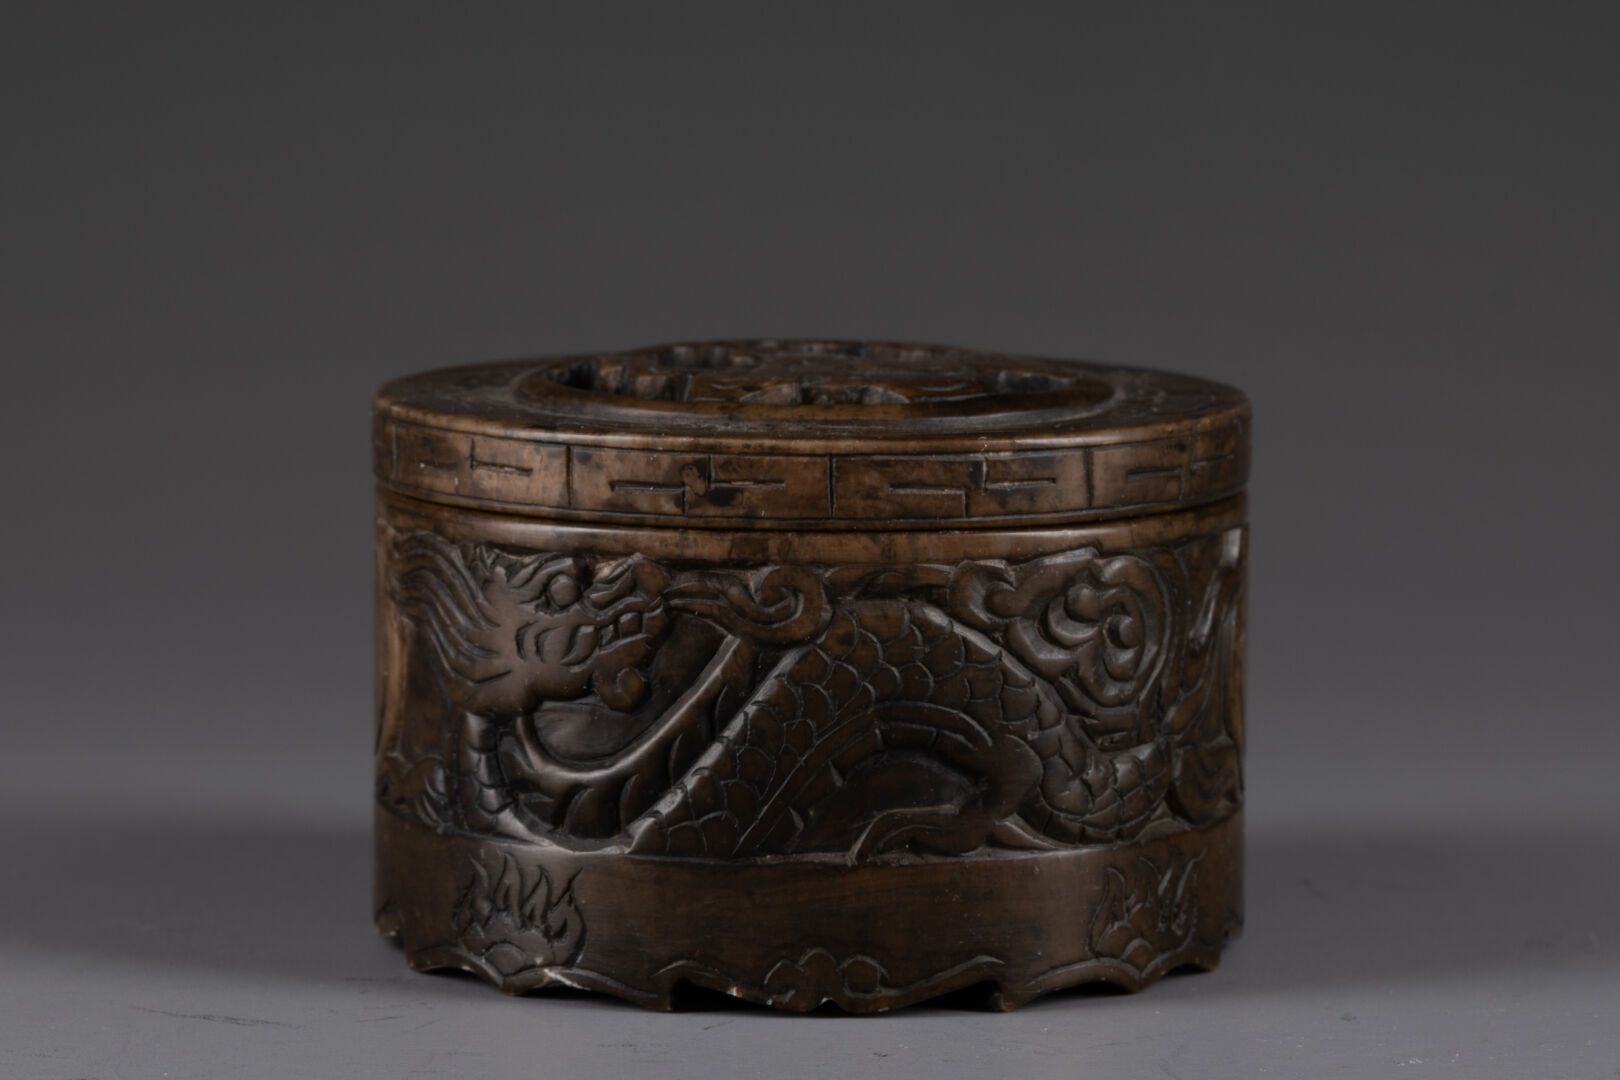 CHINE - Vers 1900 蝙蝠和龙追逐圣珠的小圆饼 
带有棕色铜锈的青铜器 
H.3.5 cm - D. 6 cm